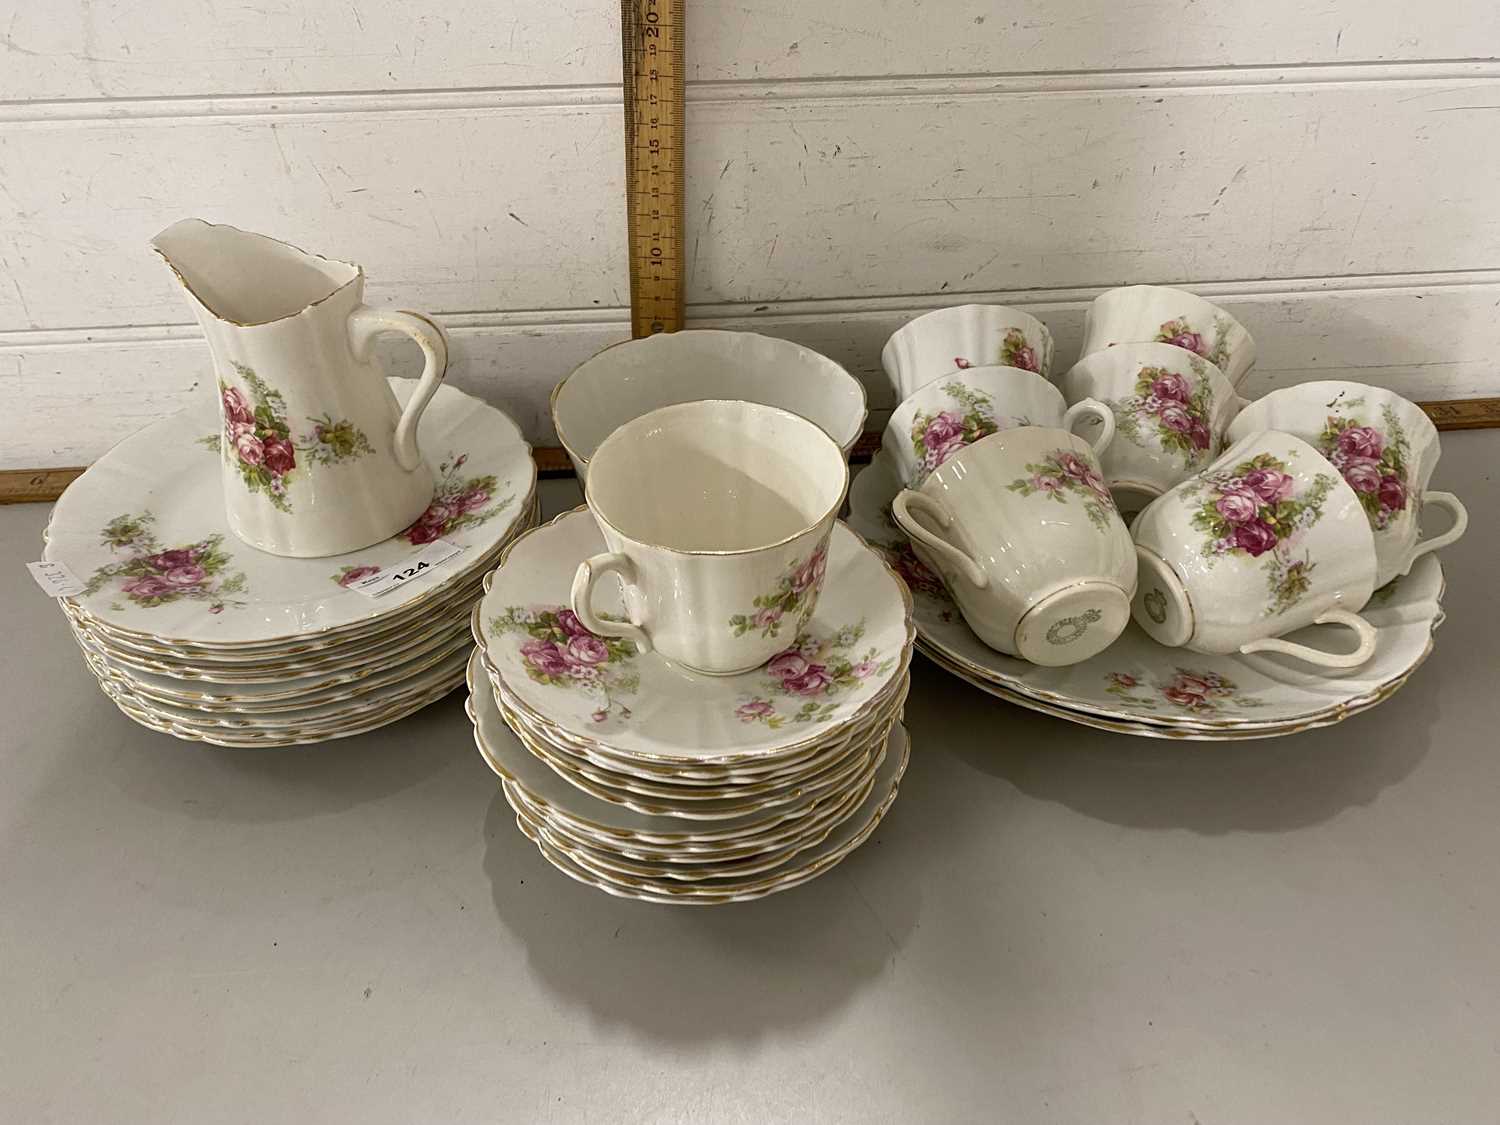 Quantity of floral decorated tea wares